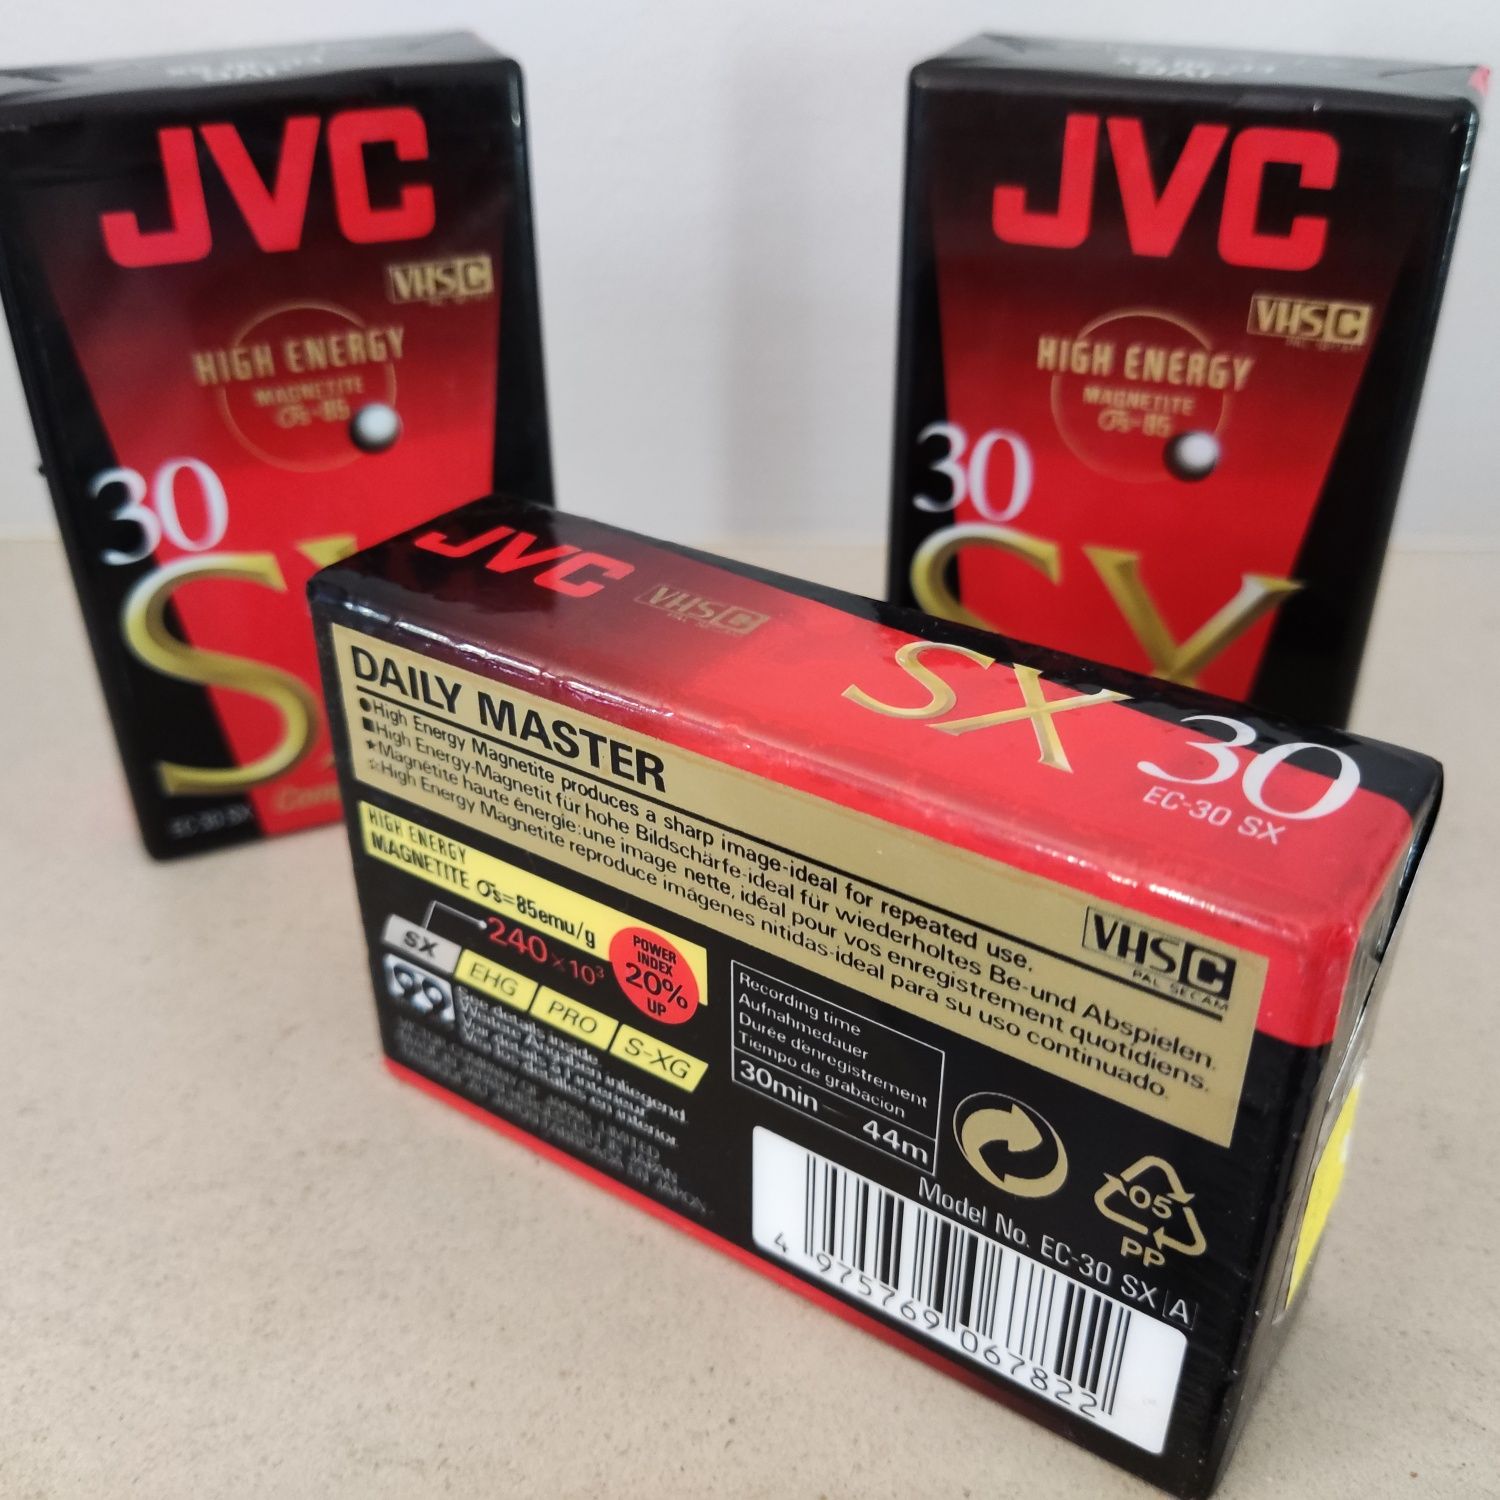 3 Unidades - JVC High Energy SX 30 Compact VHS-C